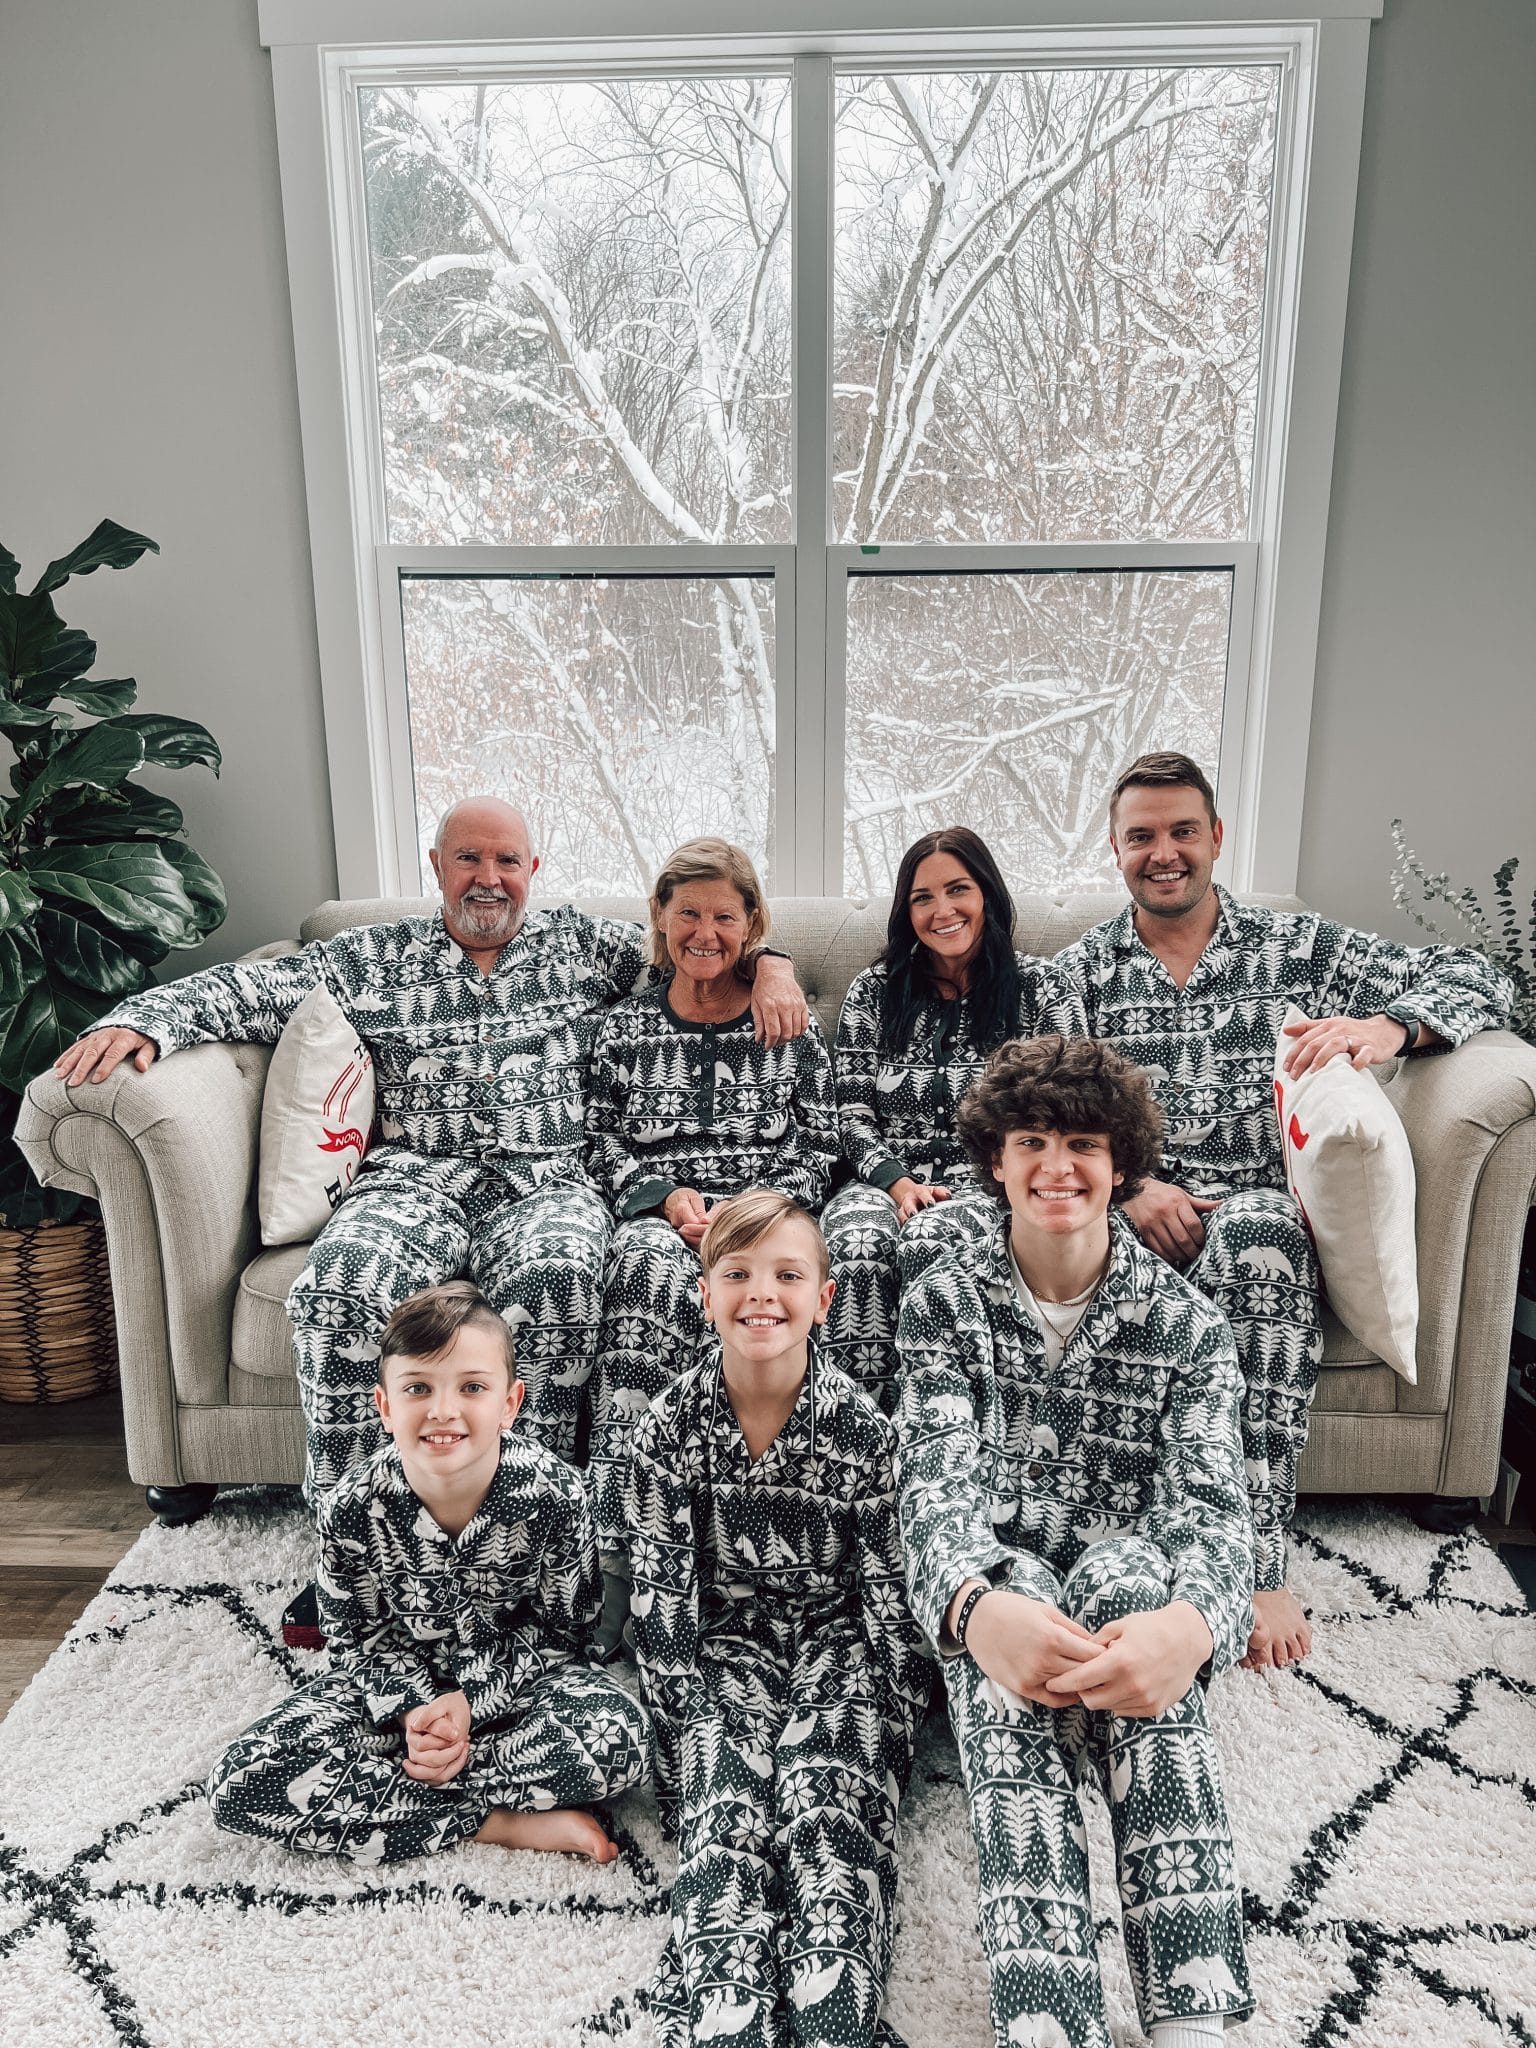 Christmas morning, Matching family pajamas, stilettos and diapers